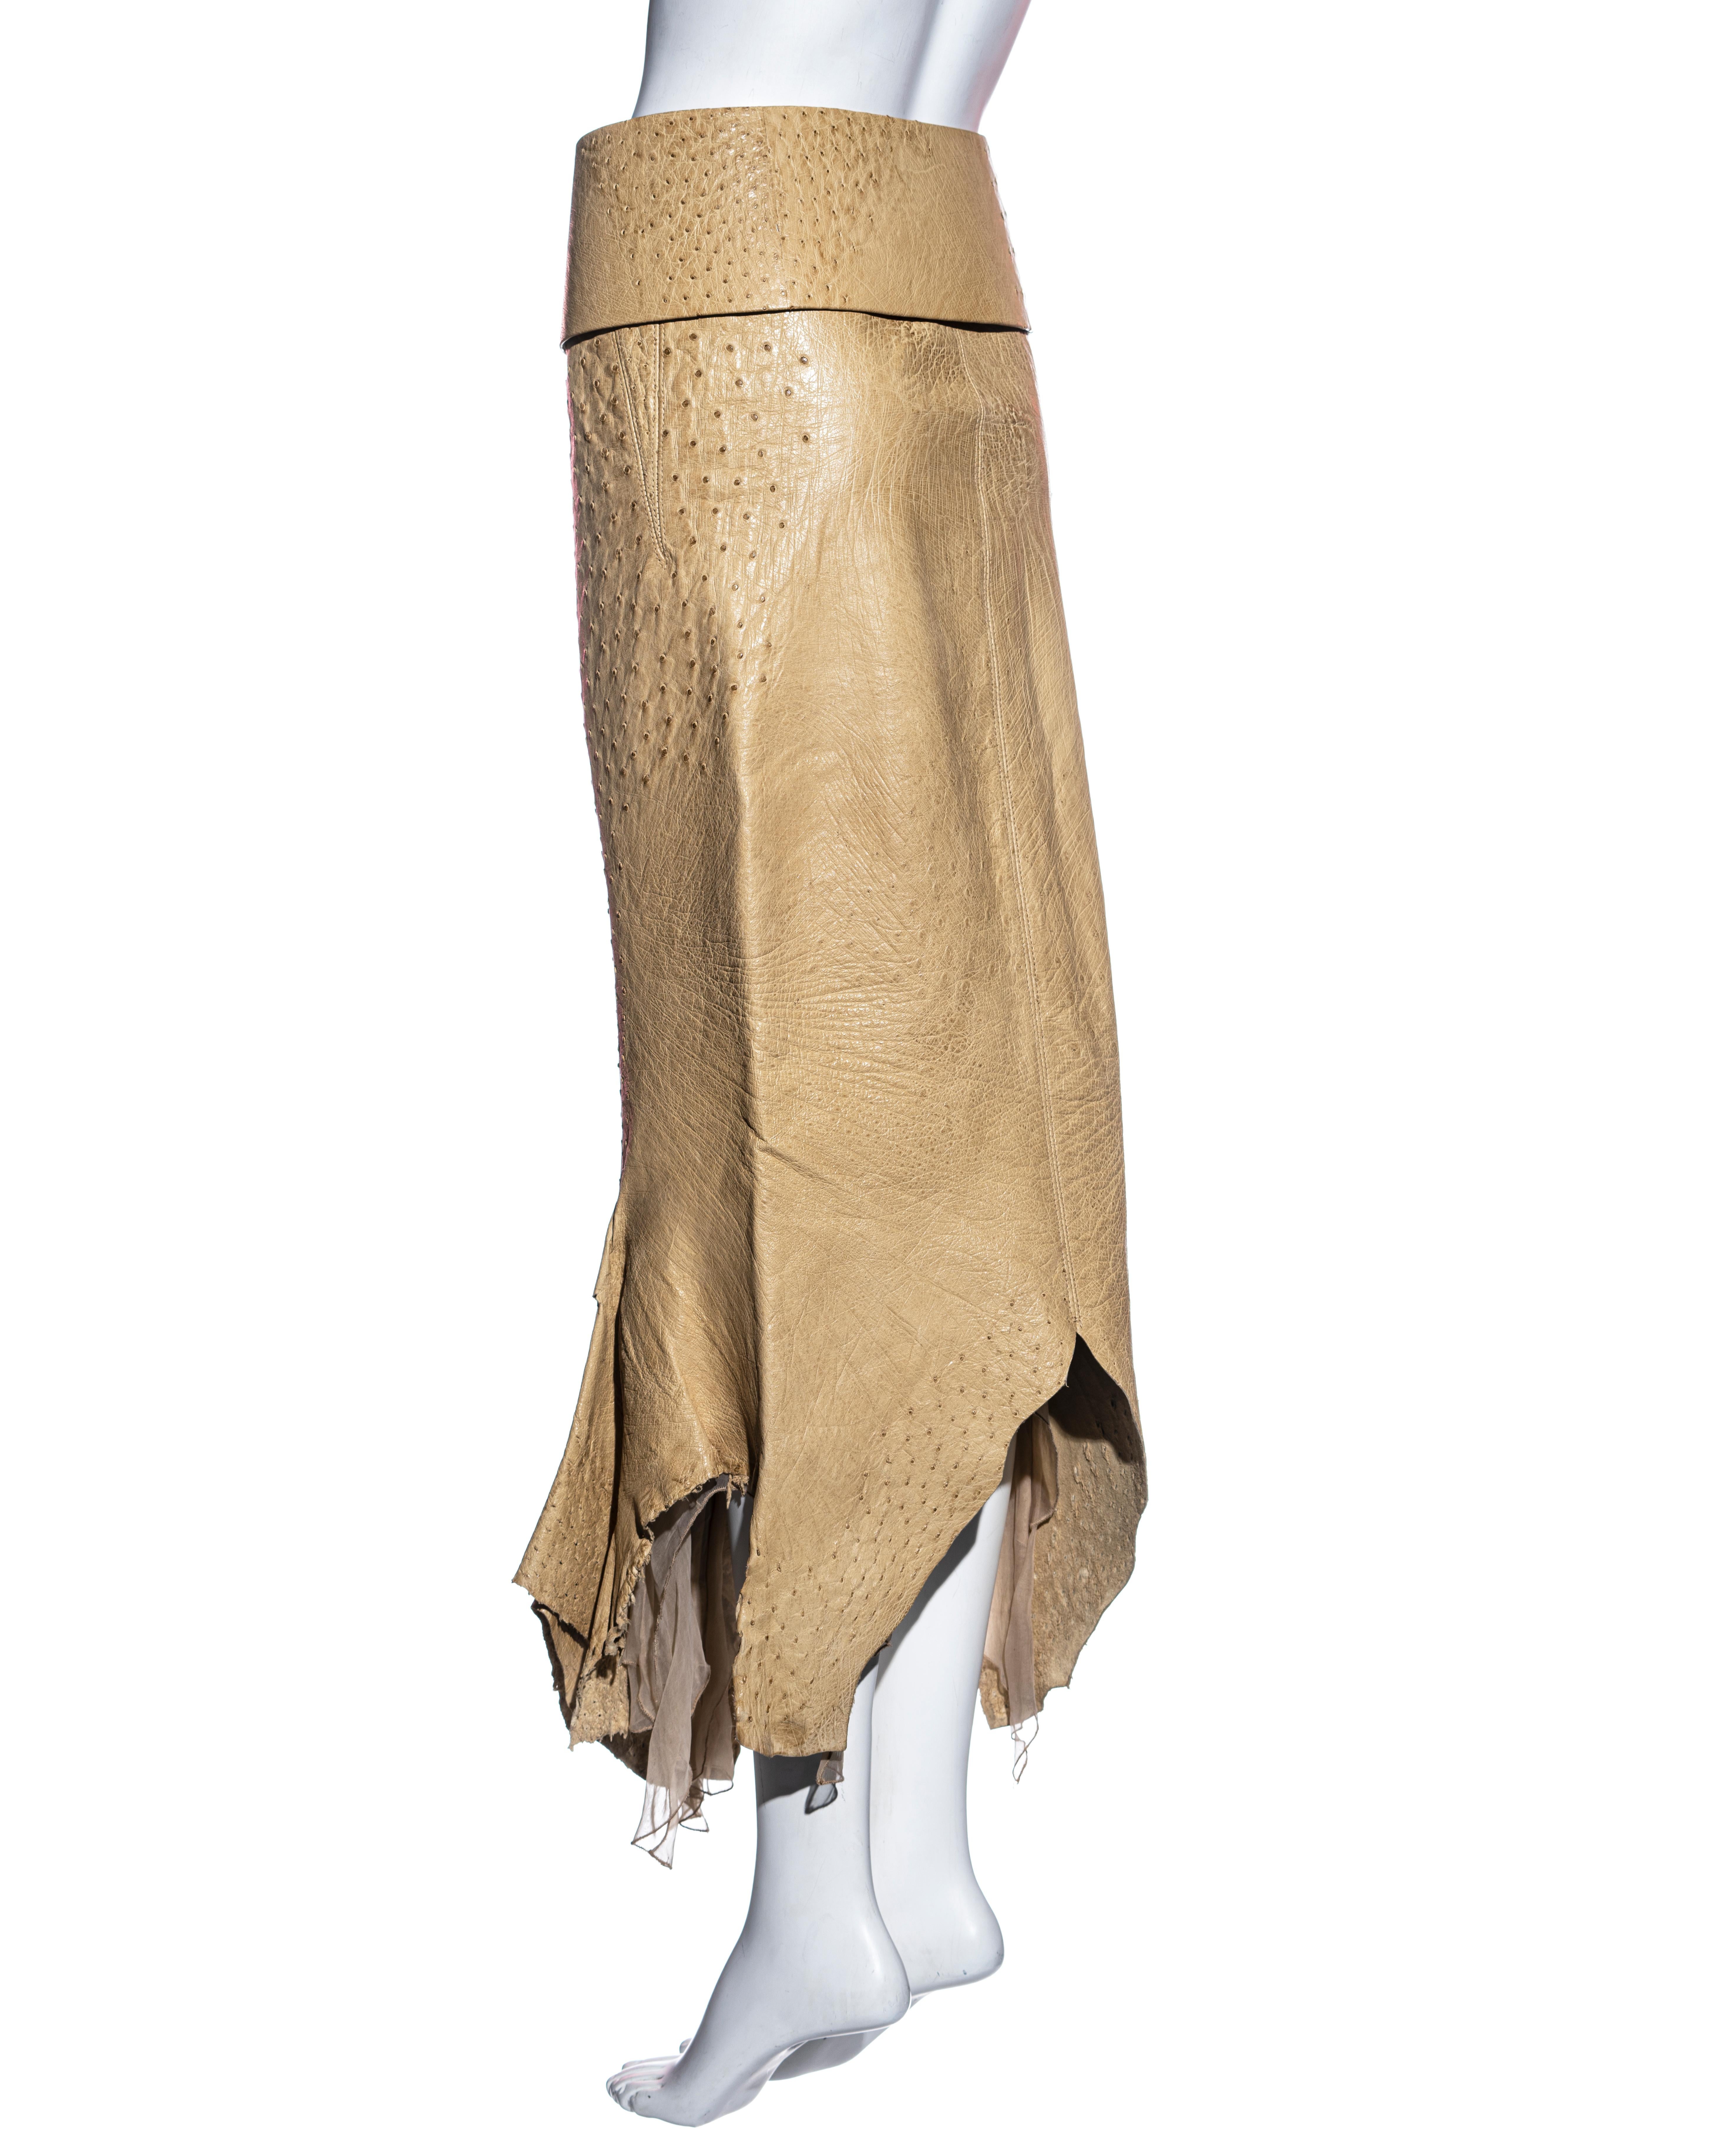 Beige Gianfranco Ferre beige ostrich leather skirt and belt, ss 2000